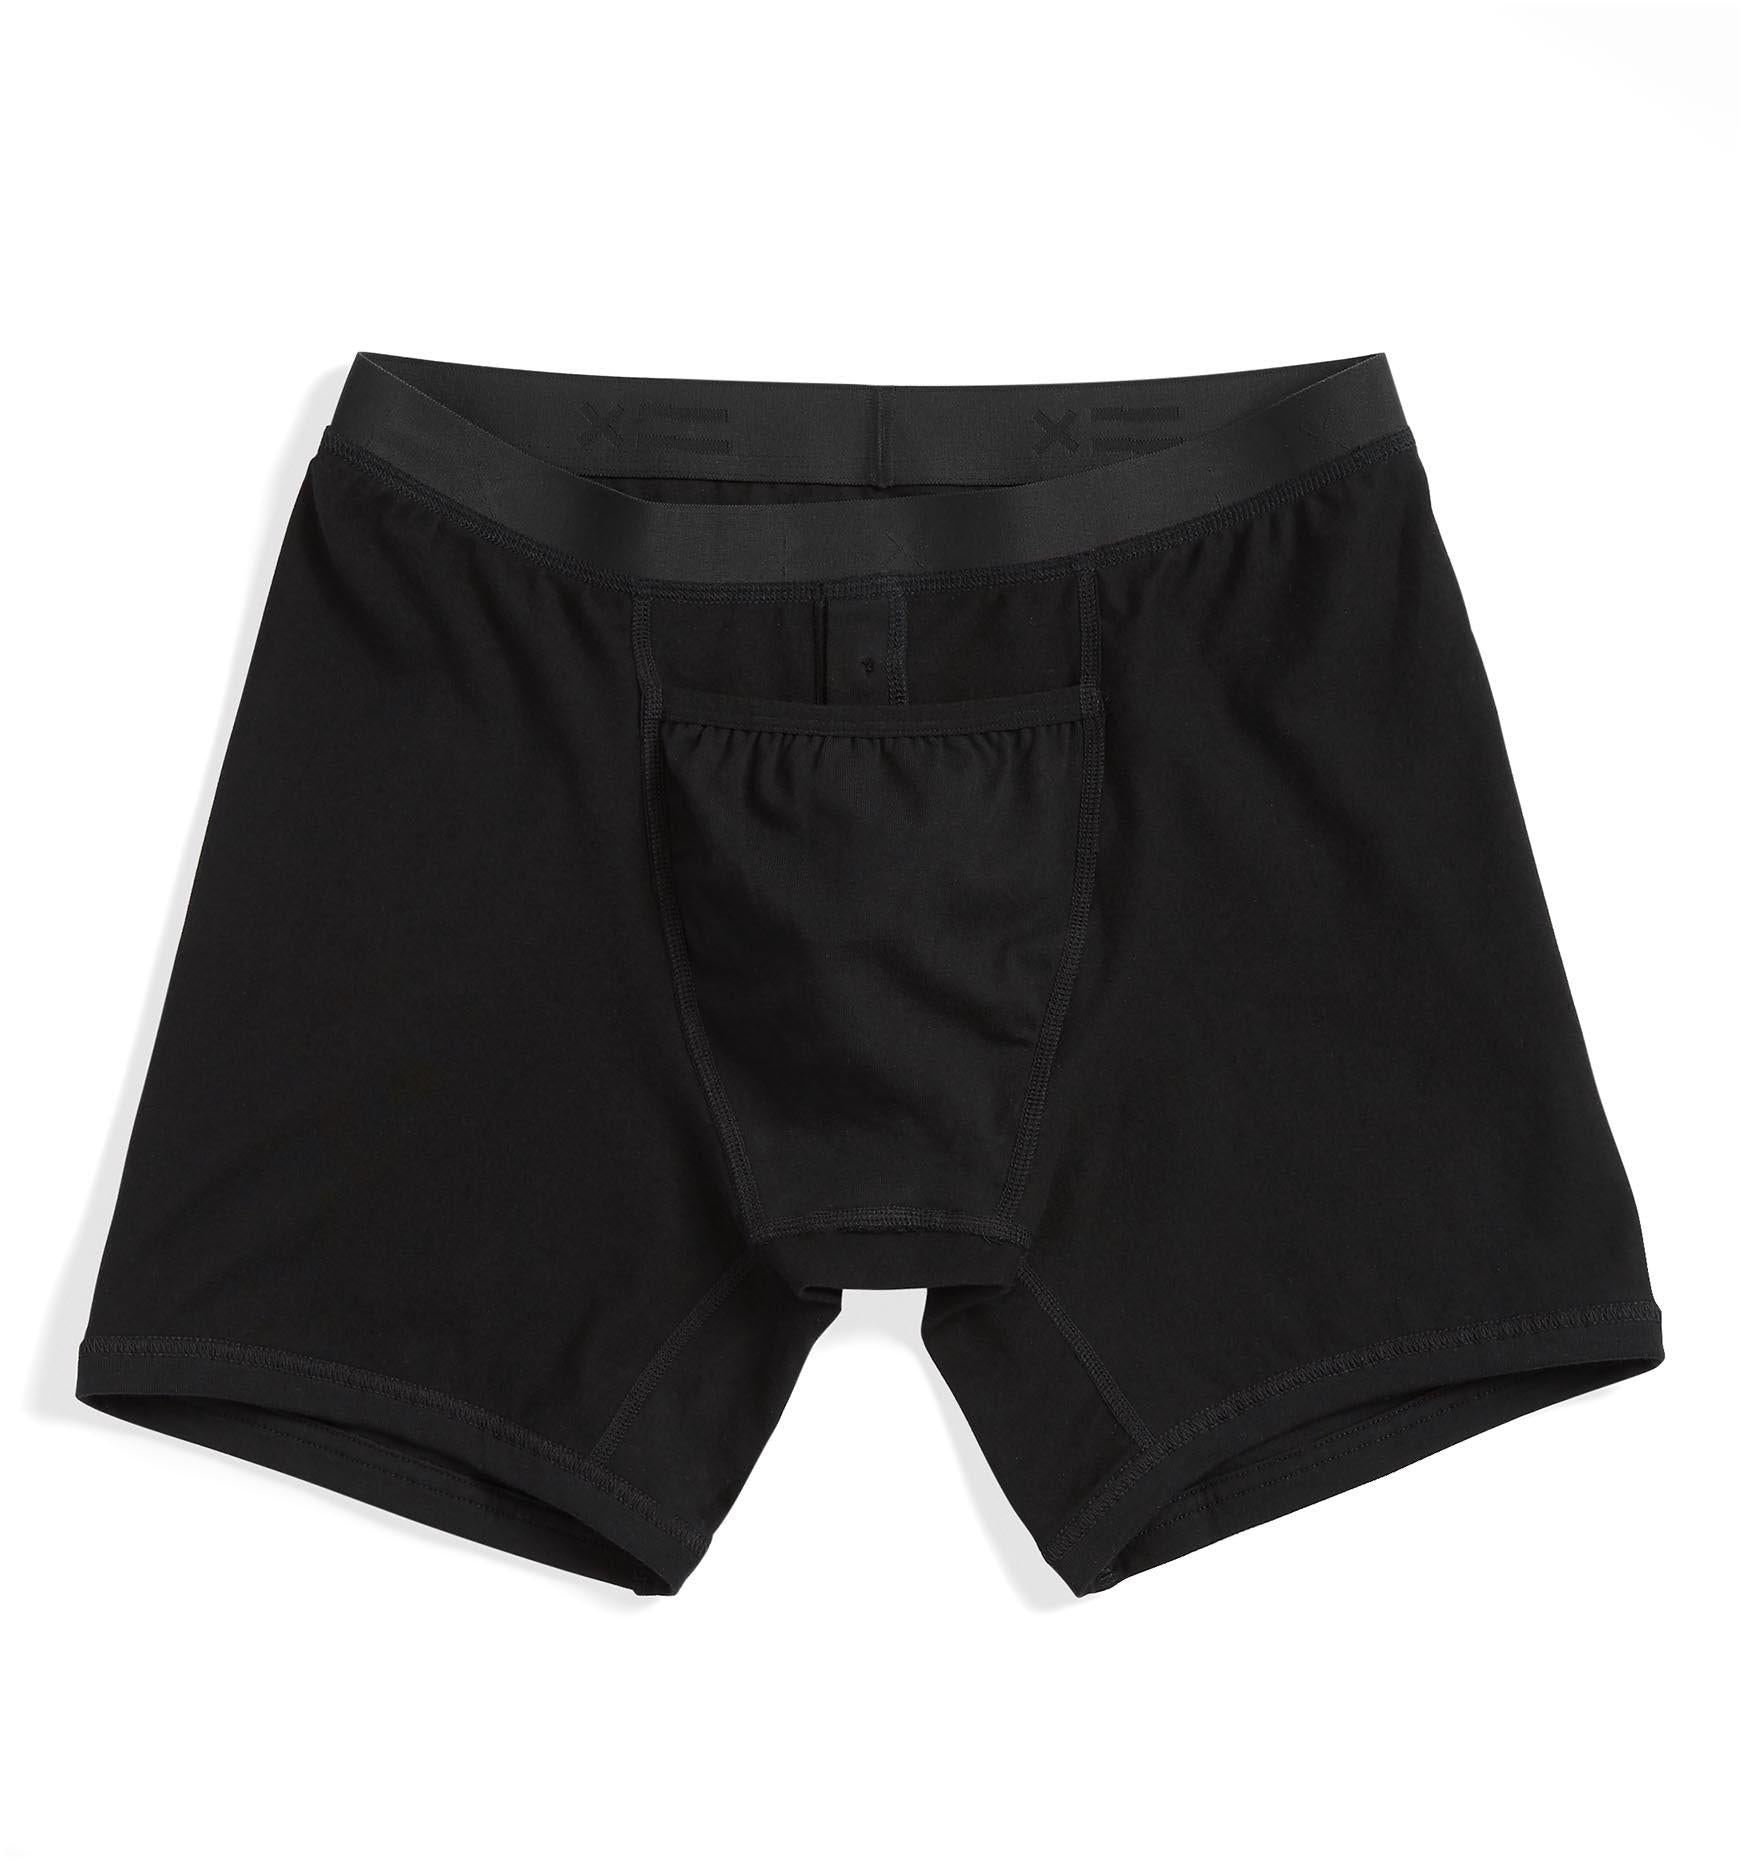 6pc Knocker Boys Seamless Comfort Boxer Briefs Underwear Non-irritating  Shorts S Blue